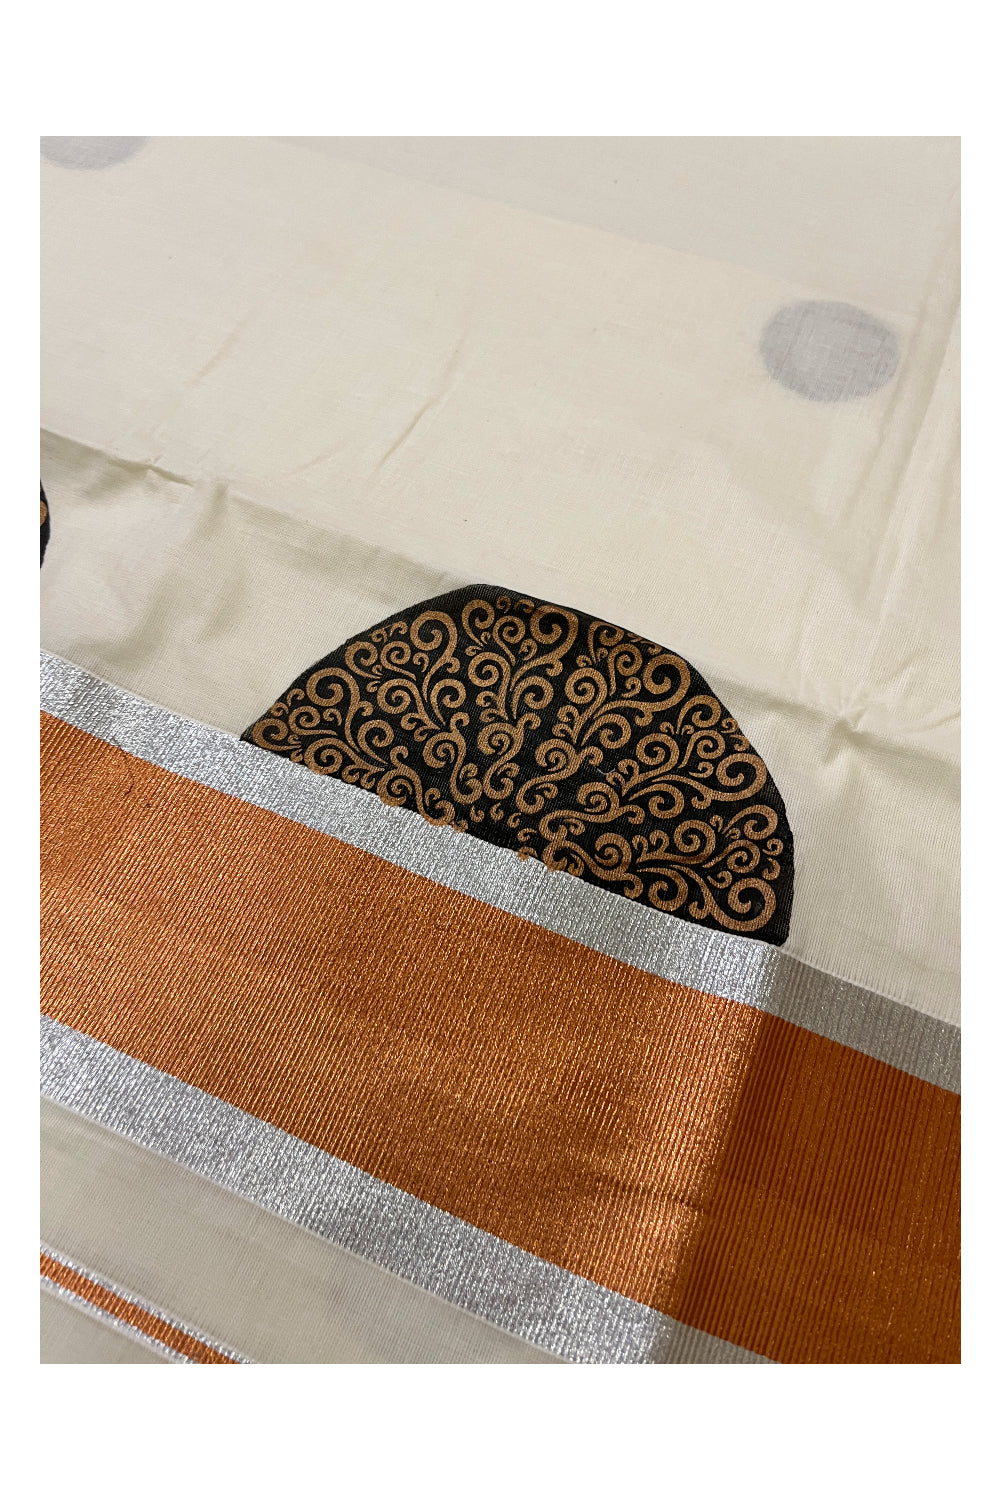 Kerala Cotton Silver and Copper Kasavu Border Saree with Block Printed Design